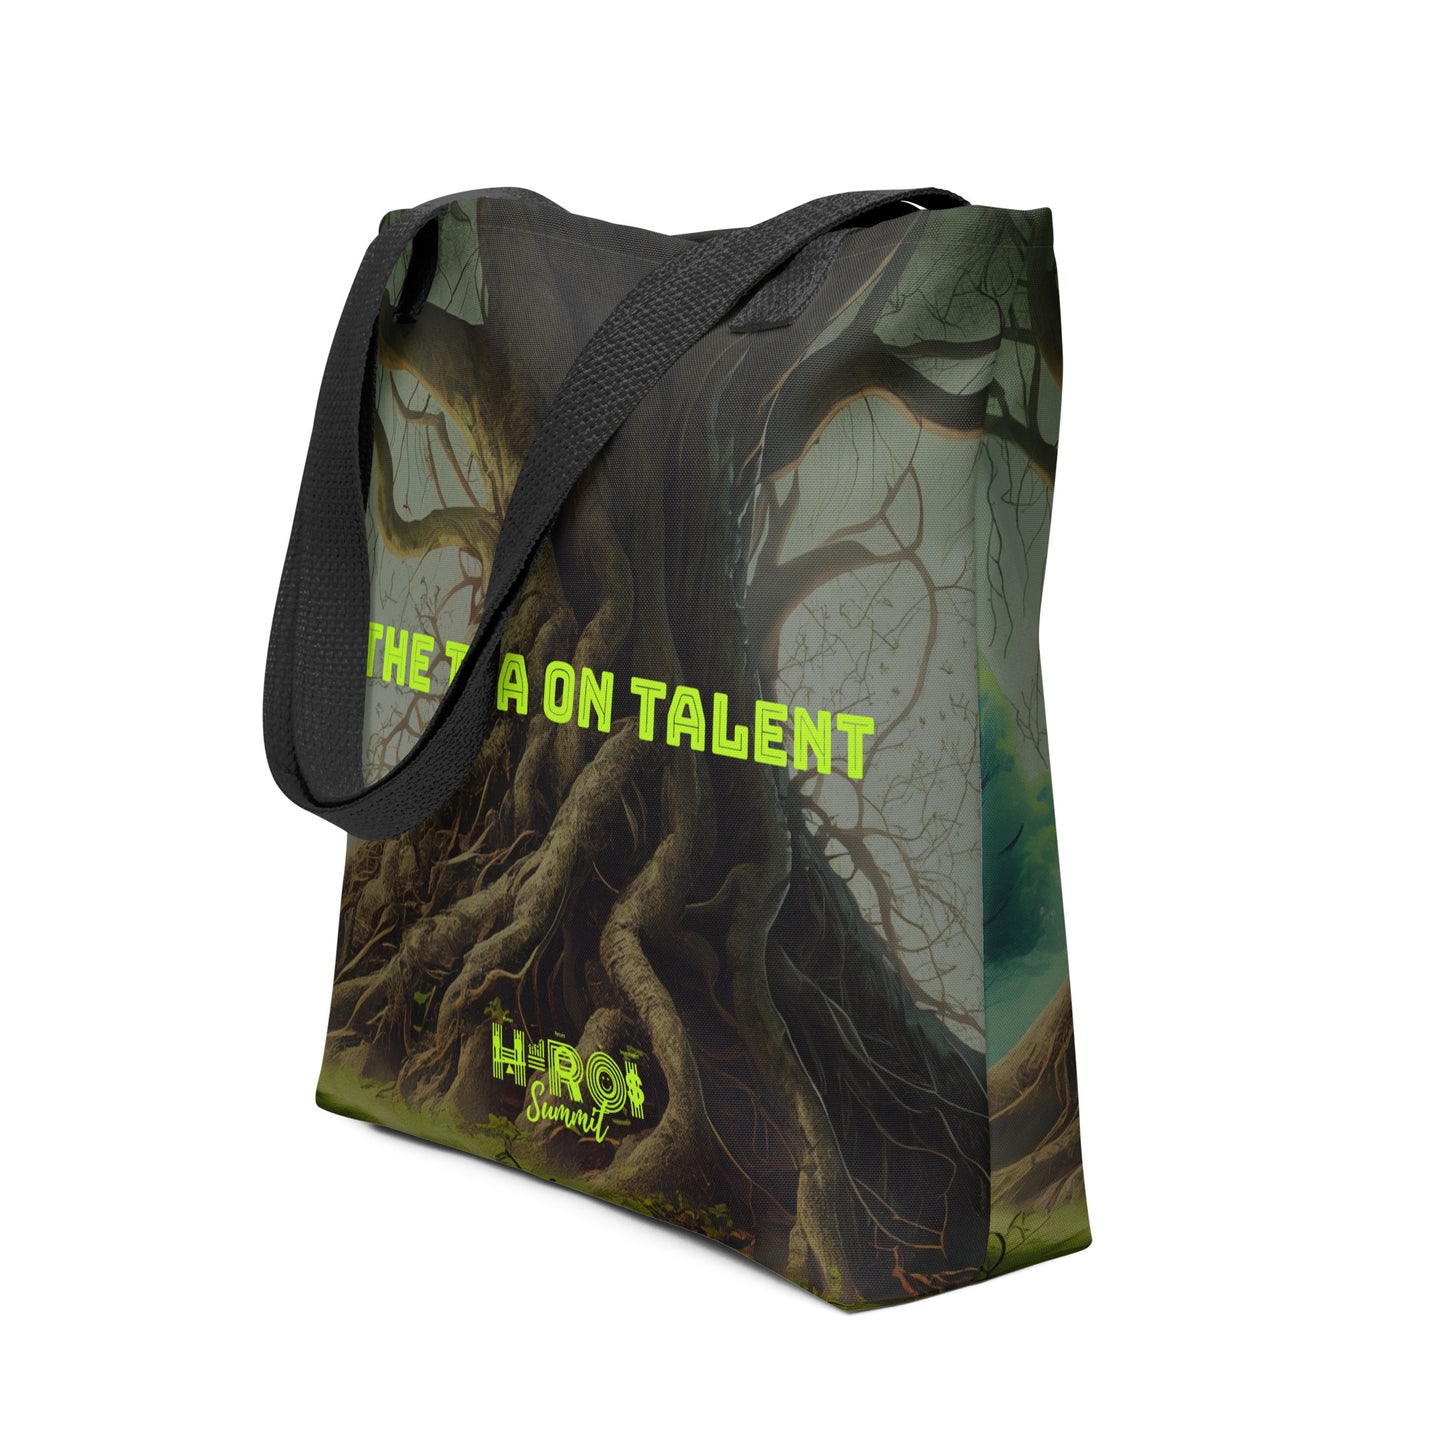 The Tea on Talent - H-ROI Tote bag